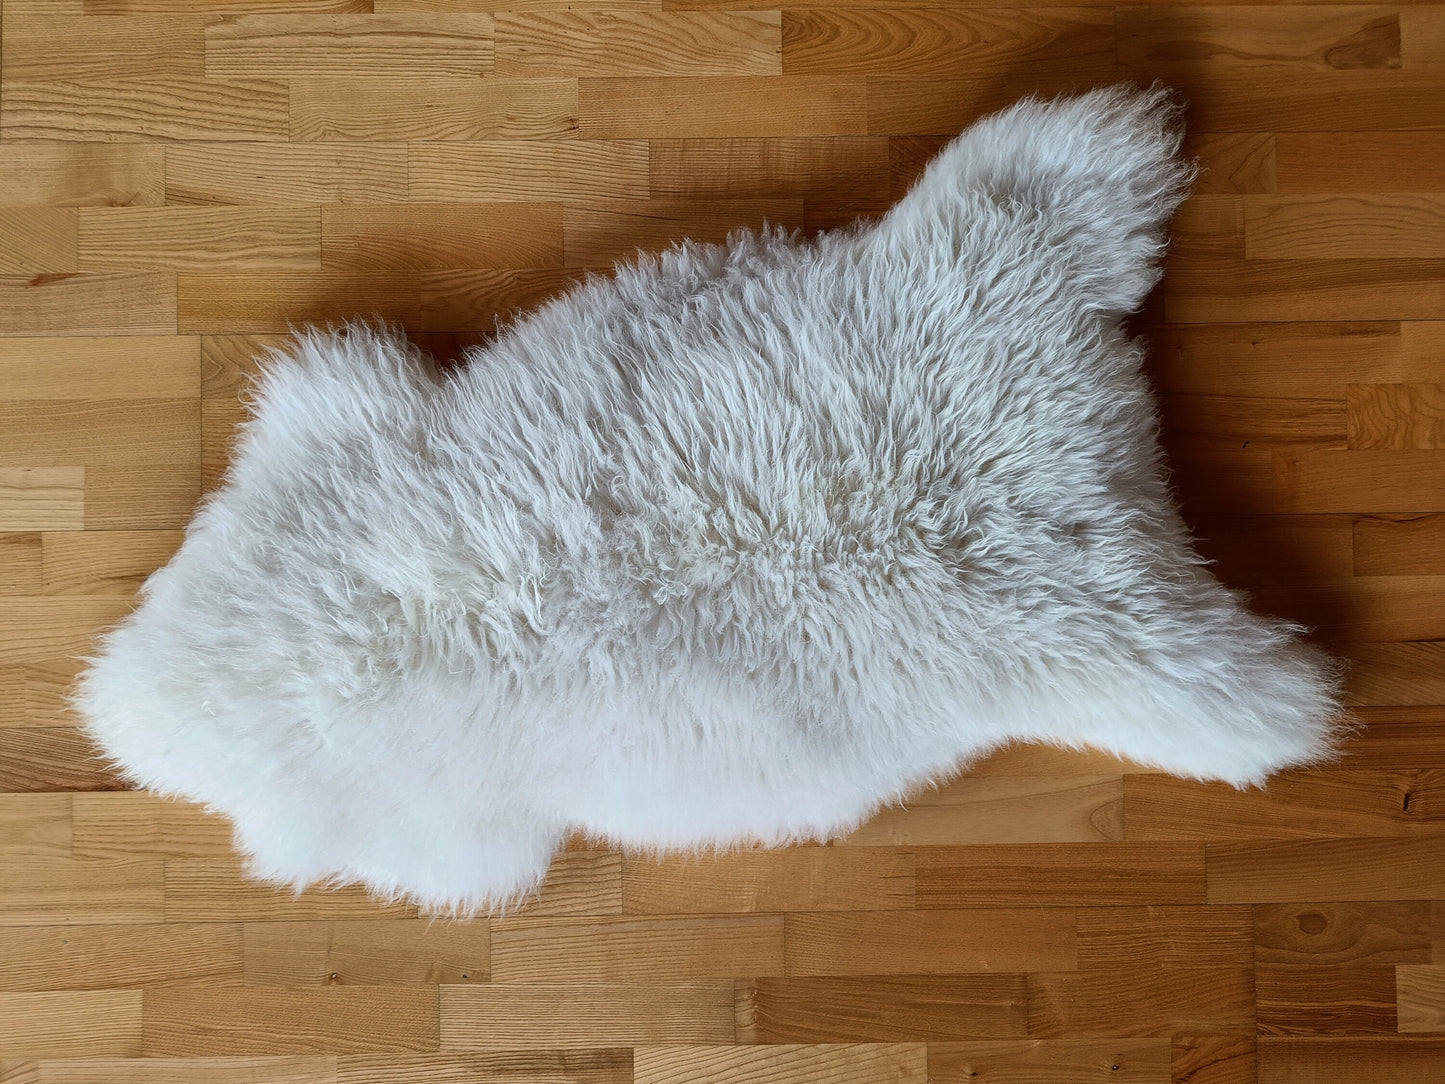 aesthetic rug - sheepskin rug - living room rug - scandinavian rug - bedside rug